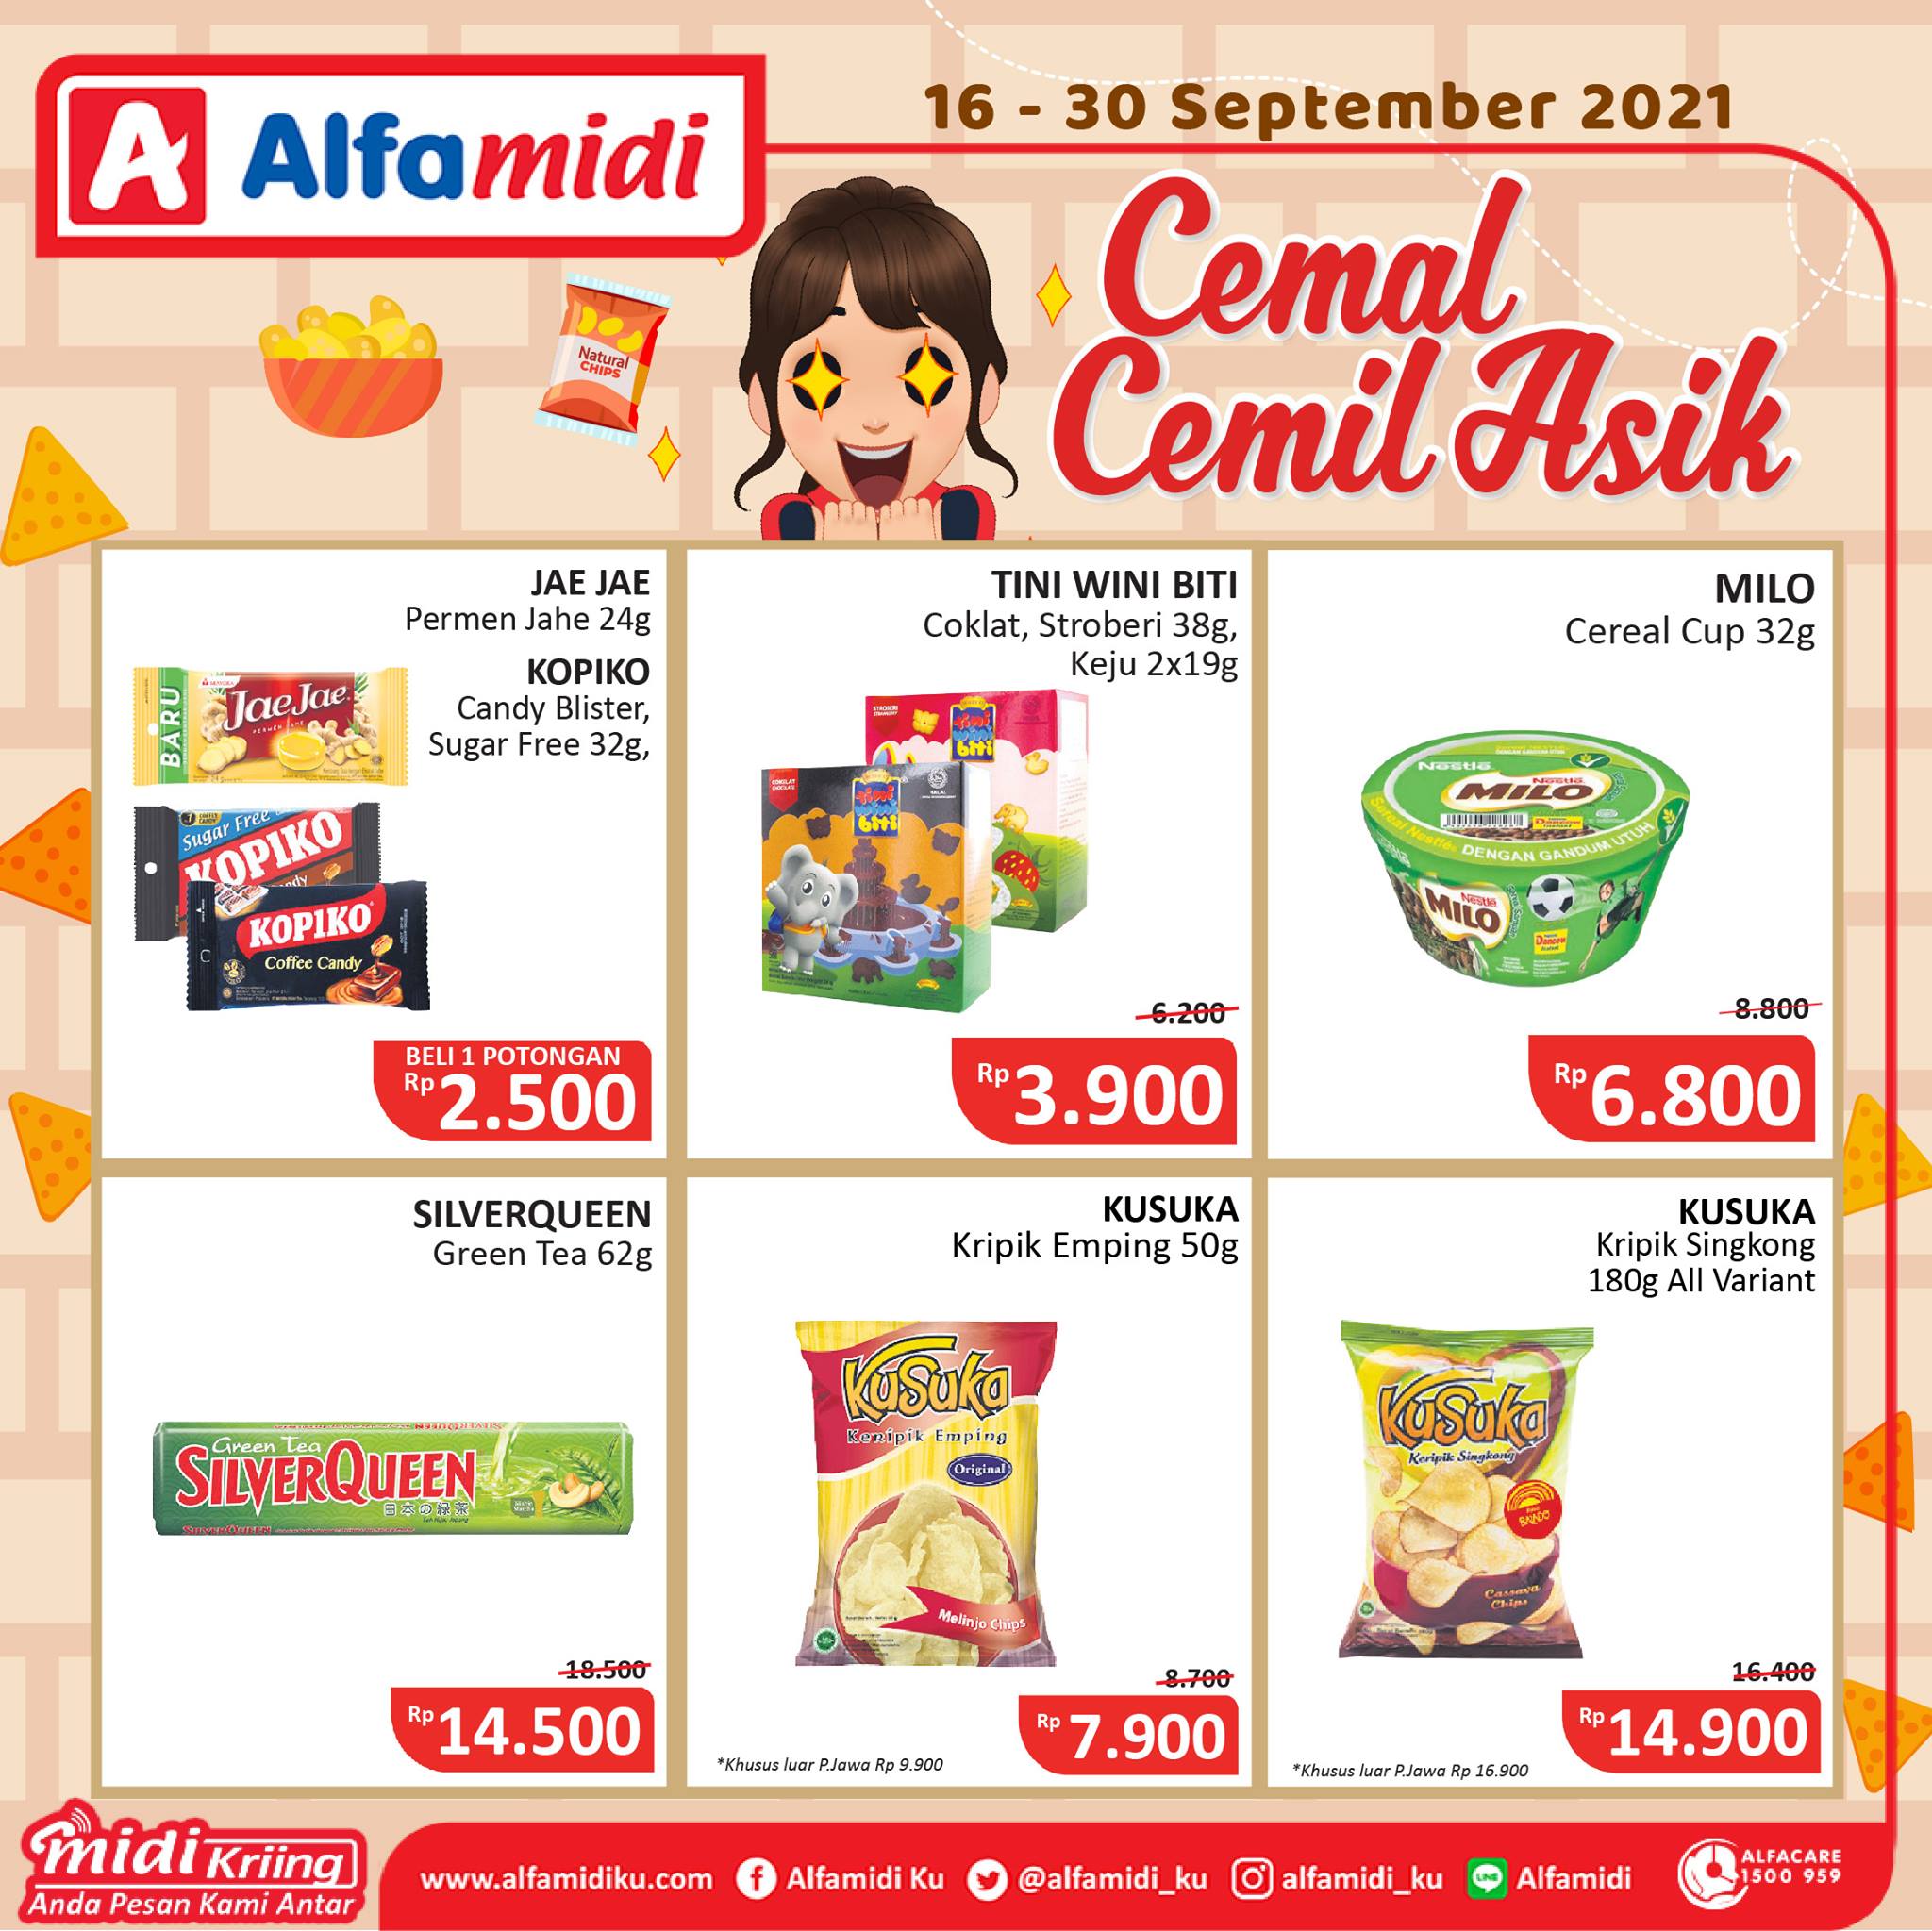 Katalog Promo Snack dan Cemilan Alfamidi Terbaru 16-30 September 2021